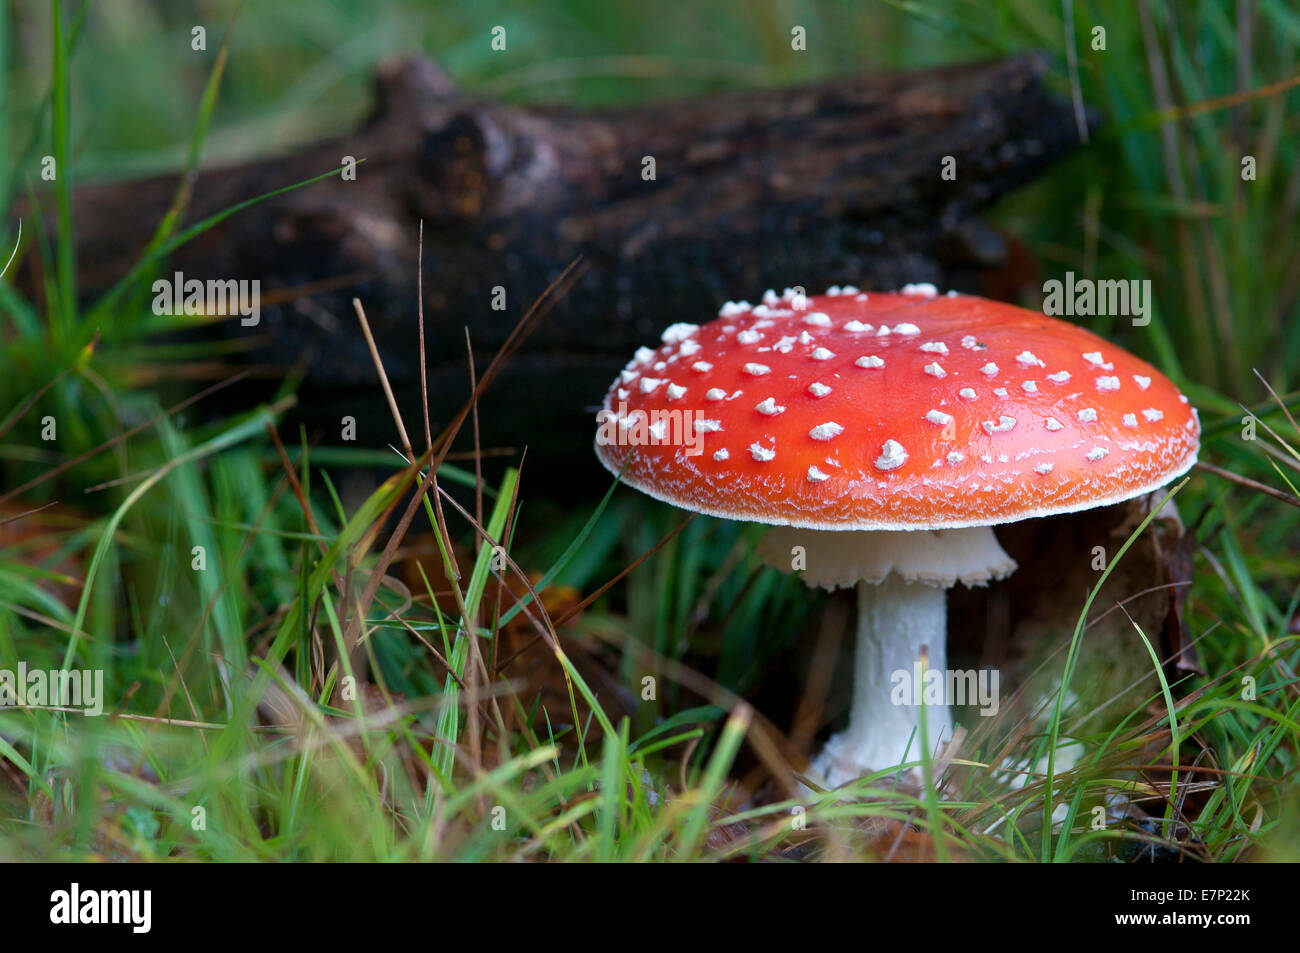 Fly amanita, Fly agaric, mushroom, poisonous, champignon, red, Stock Photo